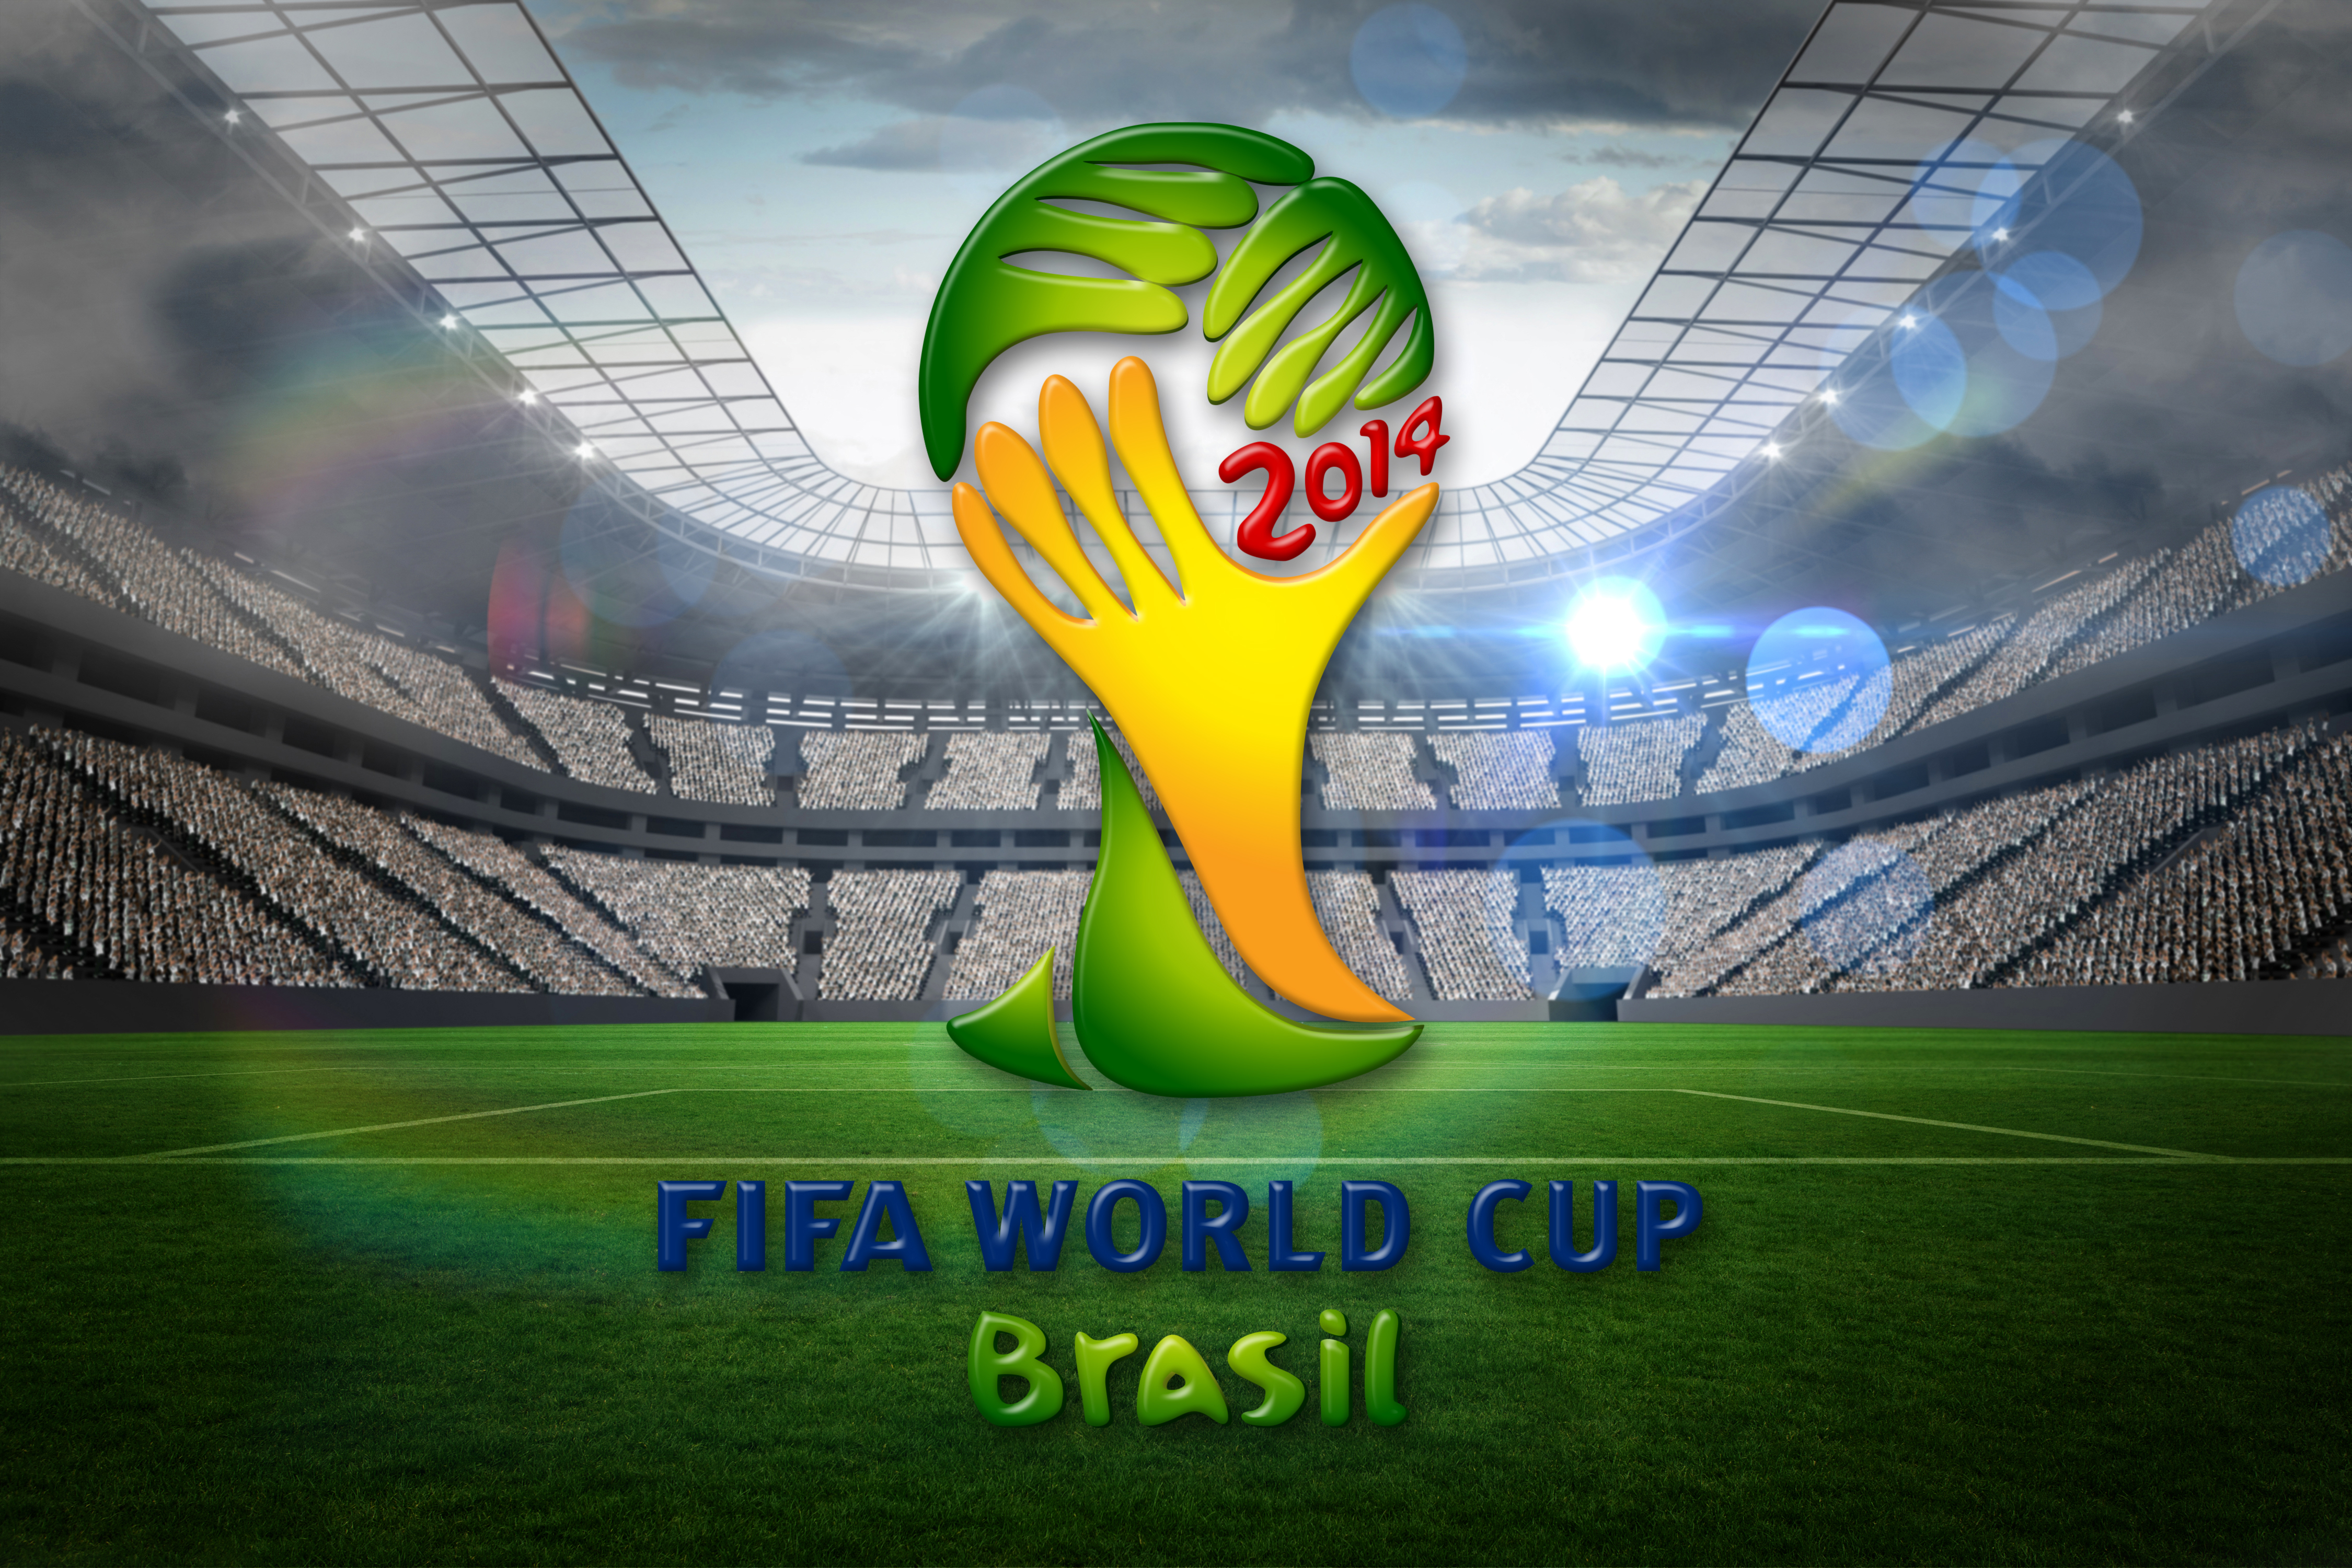 World s cup. ФИФА ворлд кап 2014. ФИФА 2014 Бразилия. 2014 ФИФА ворлд кап Бразил.